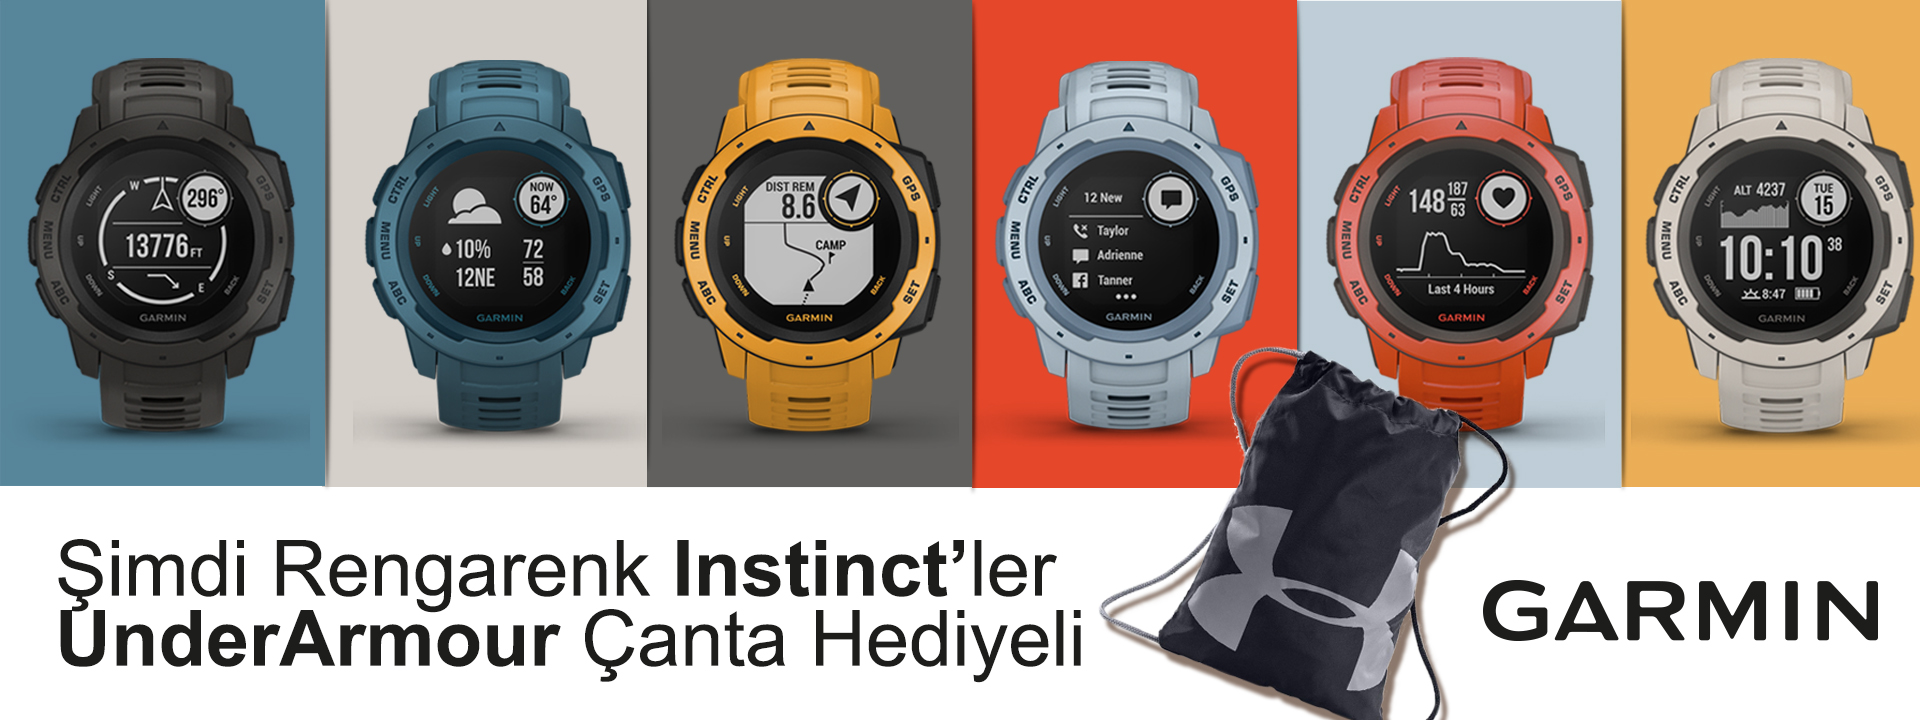 Instinct Slide - Analog Watch , HD Wallpaper & Backgrounds